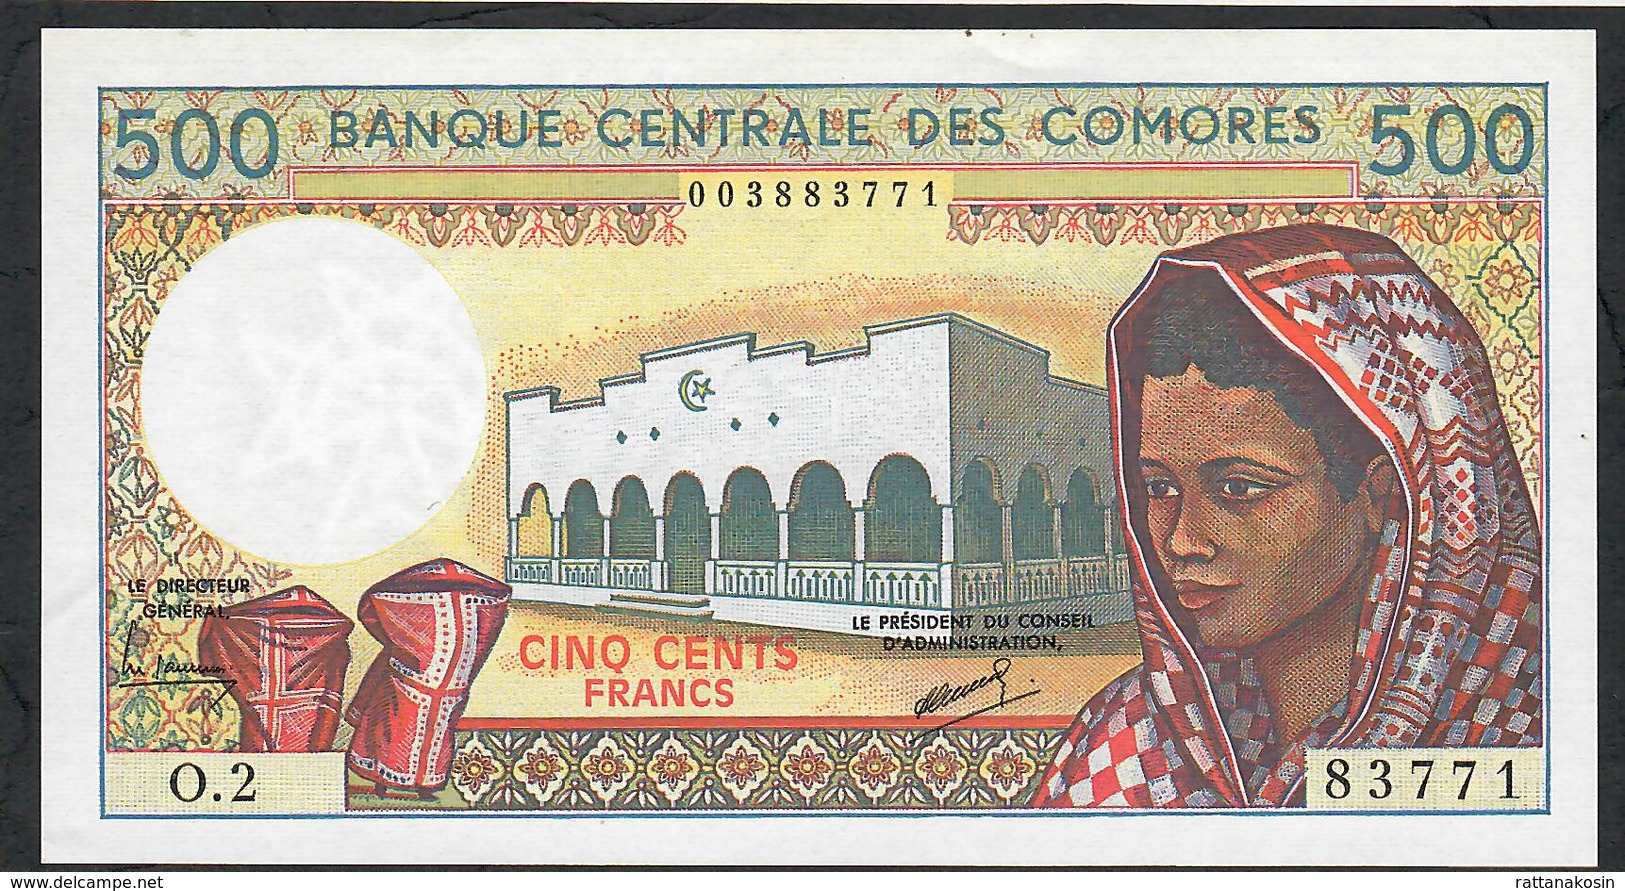 COMORES ERROR P10b INVERTED WATERMARK 500 FRANCS 1986 #O.2 Signature 2   UNC. - Comores